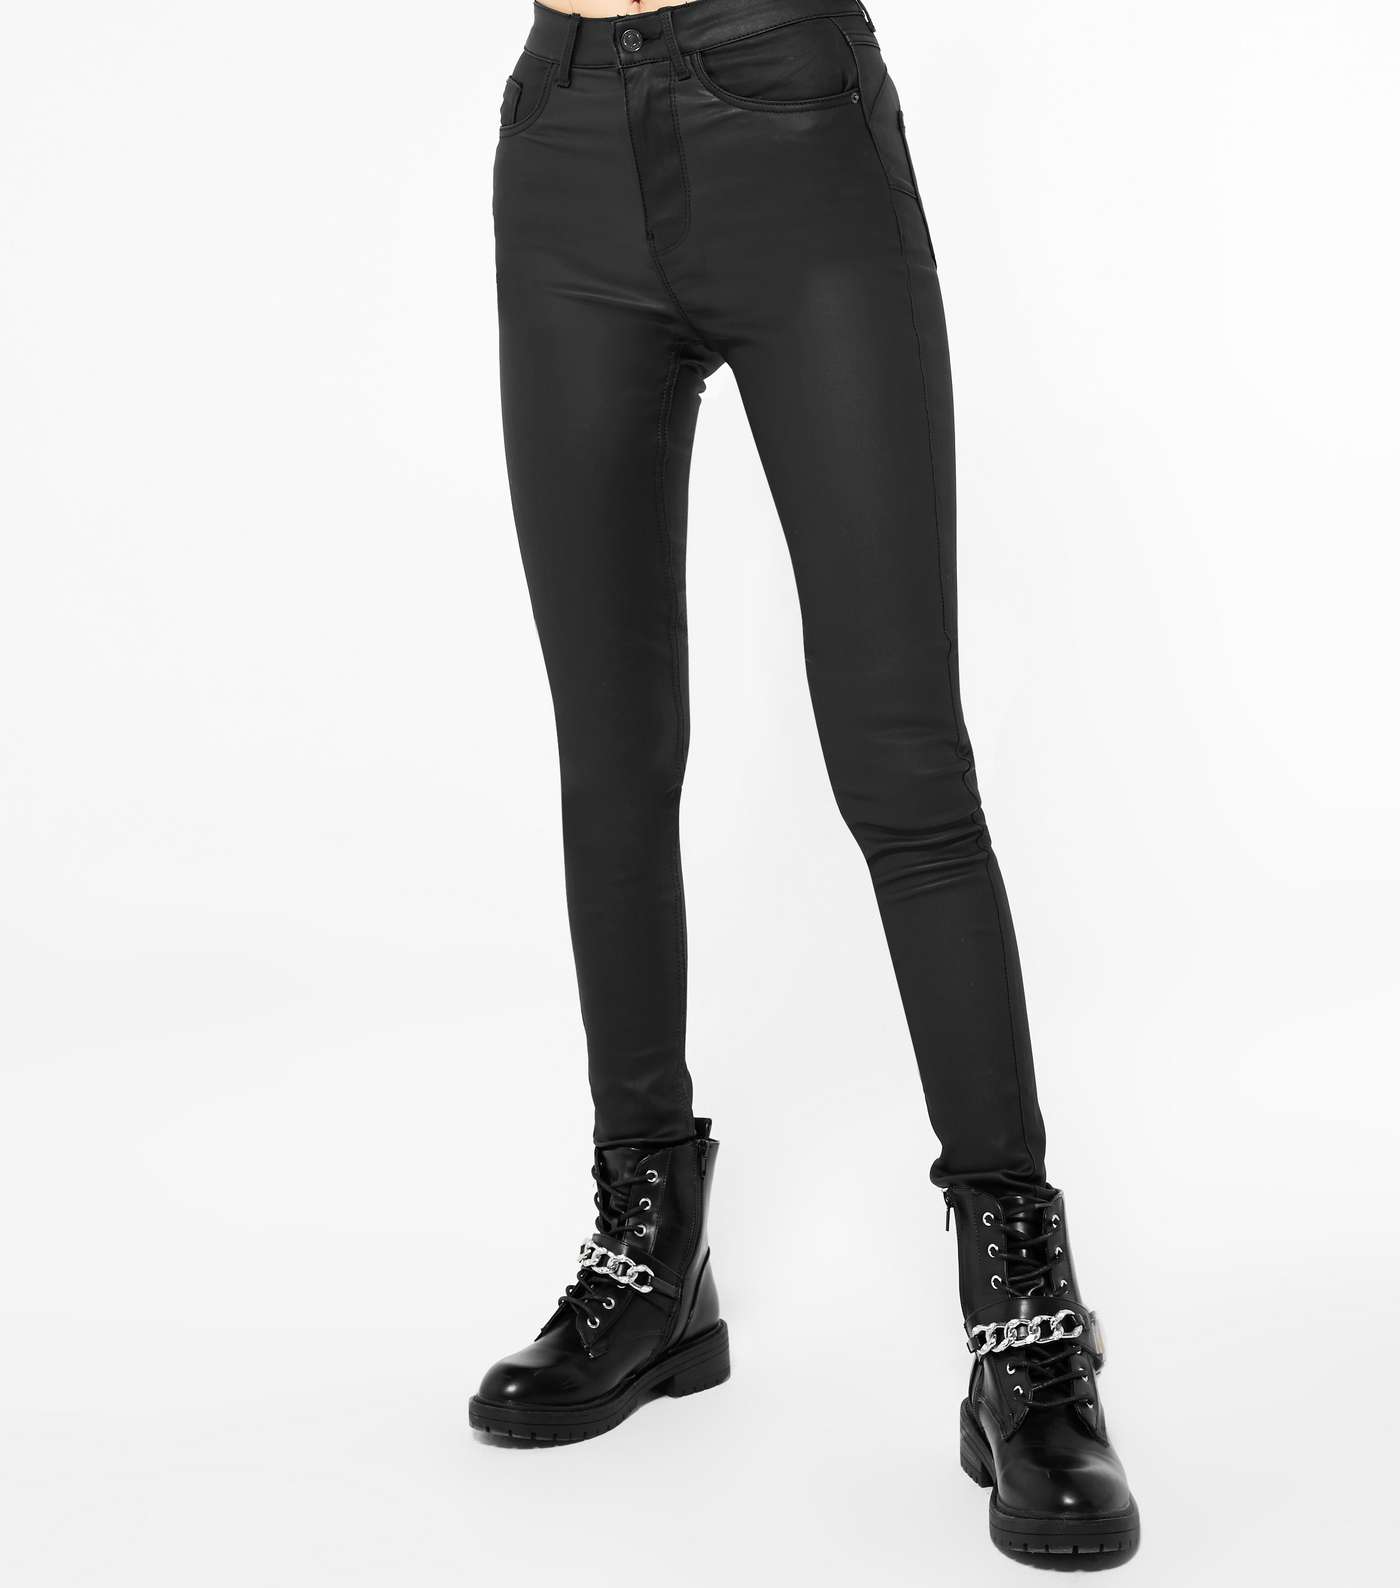 Tall Black Coated Leather-Look 'Lift & Shape' Jenna Skinny Jeans Image 2